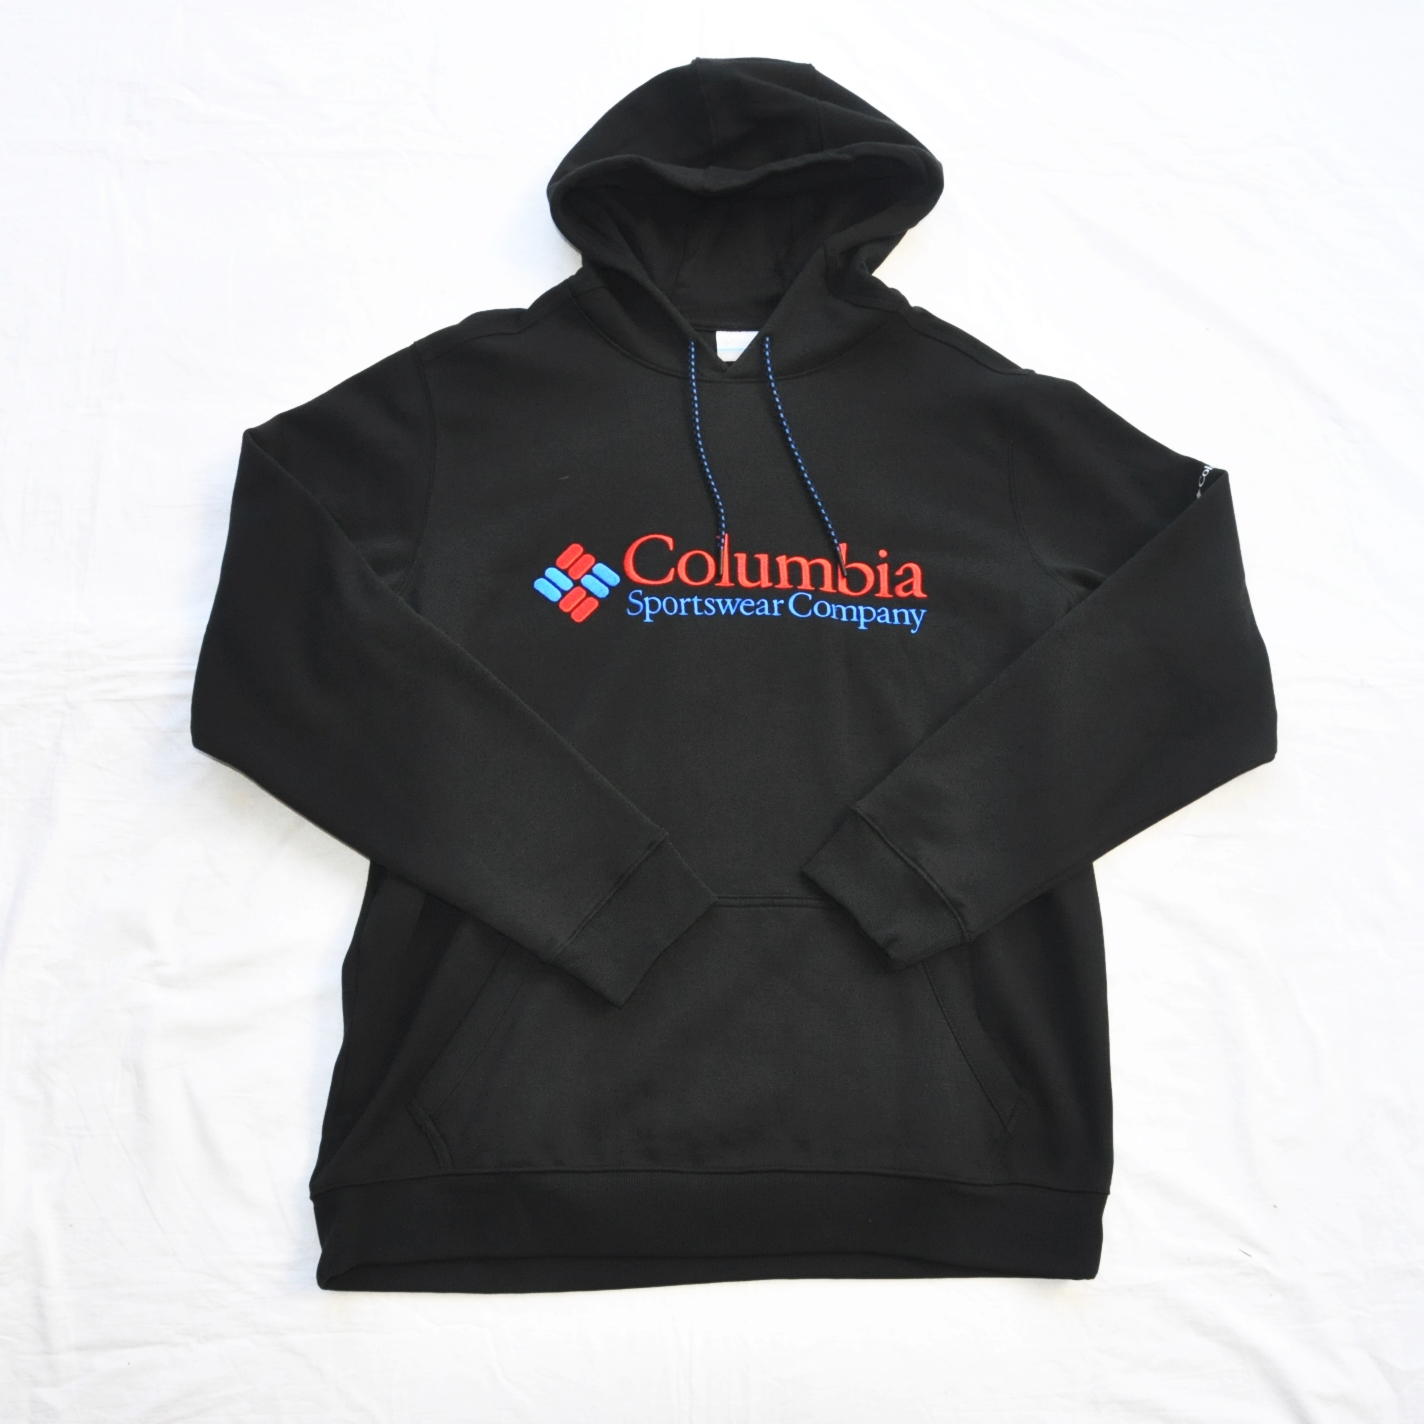 COLUMBIA/コロンビア EMBROIDERY COLUMBIA LOGO PULL OVER SWEAT HOODIE BLACK BIG SIZE